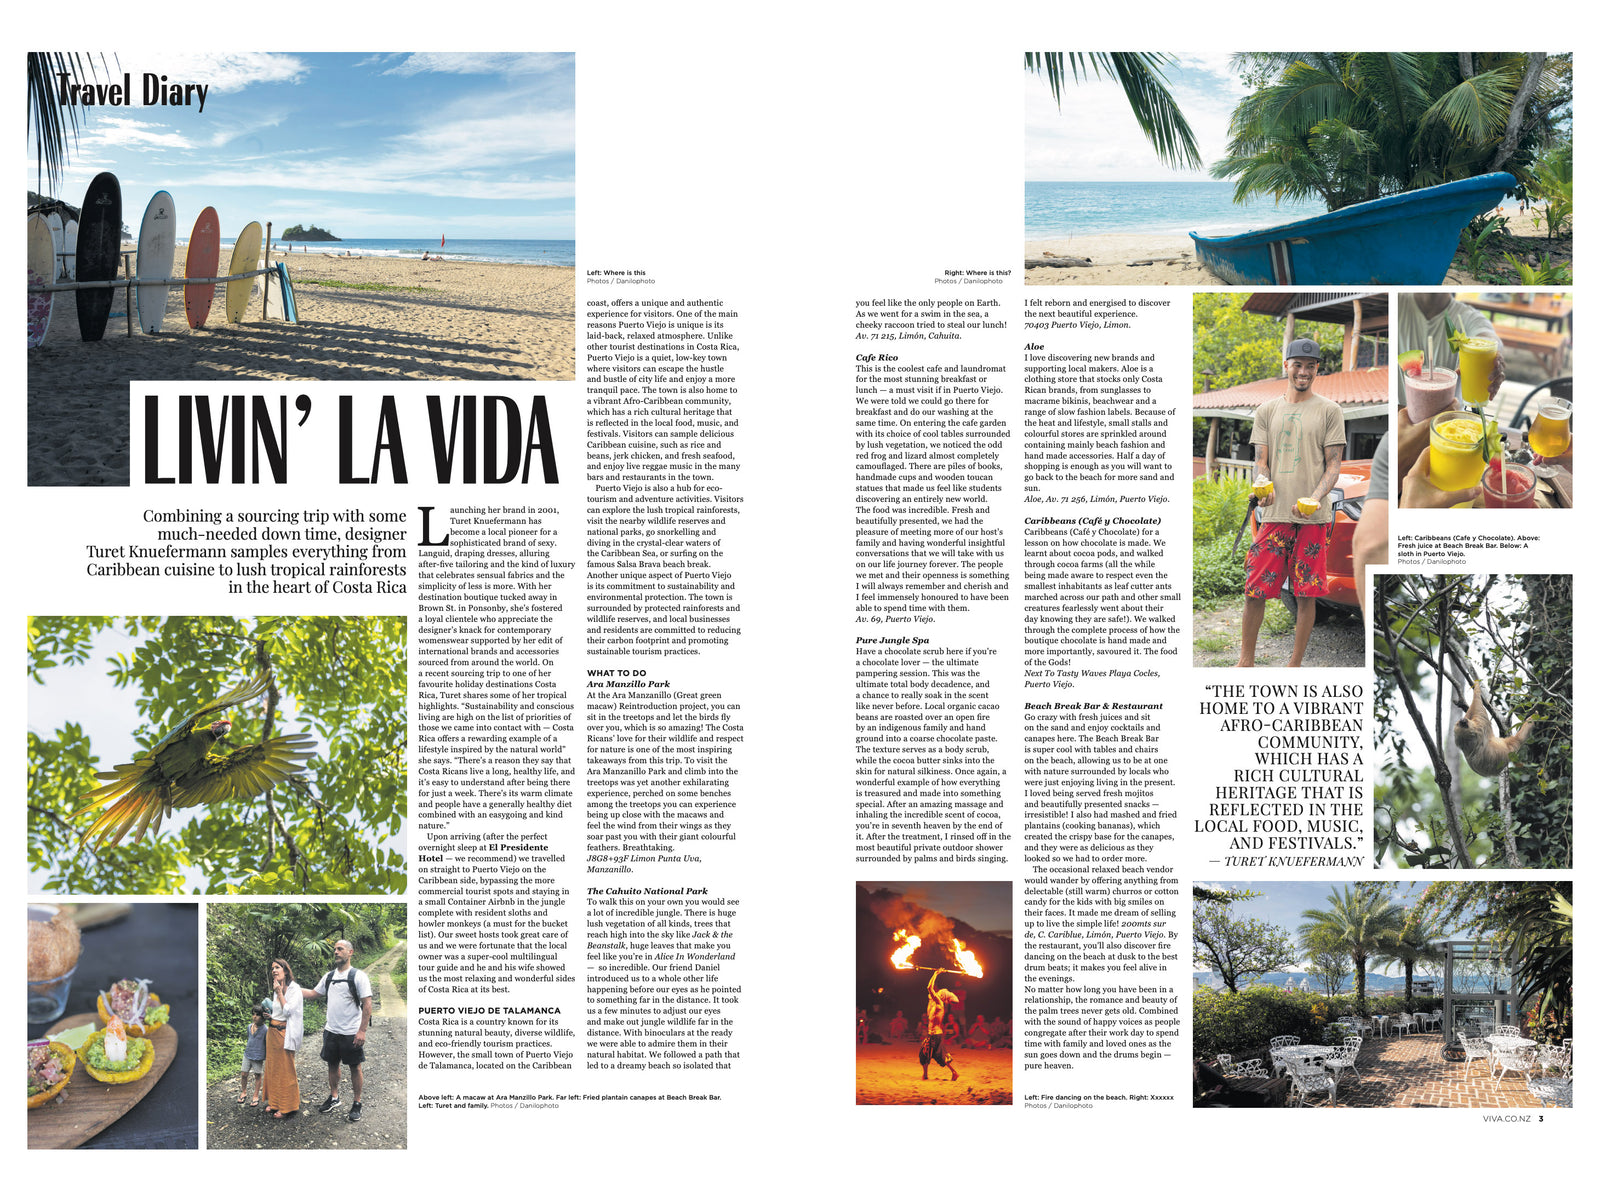 COSTA RICA - VIVA MAGAZINE TRAVEL DIARY ARTICLE - KNUEFERMANN